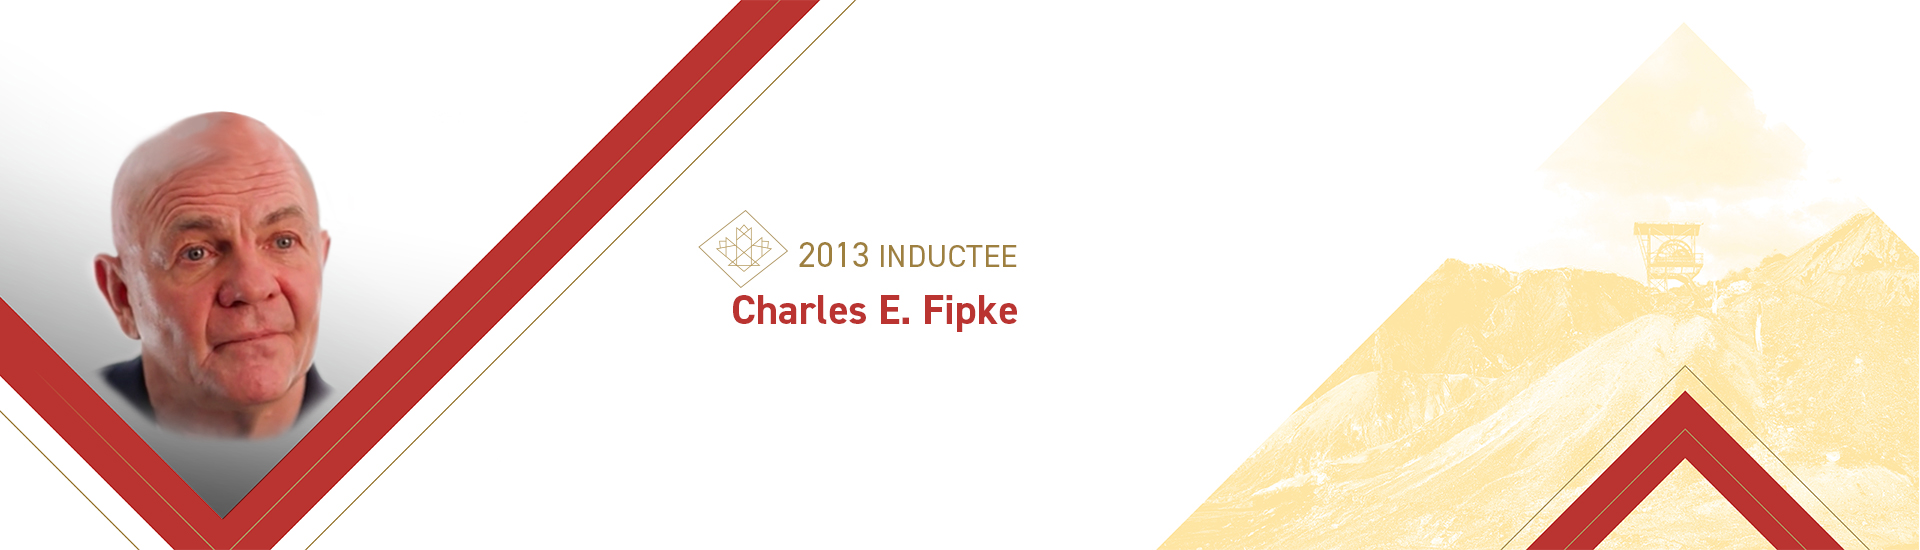 Charles E. Fipke (b. 1946)